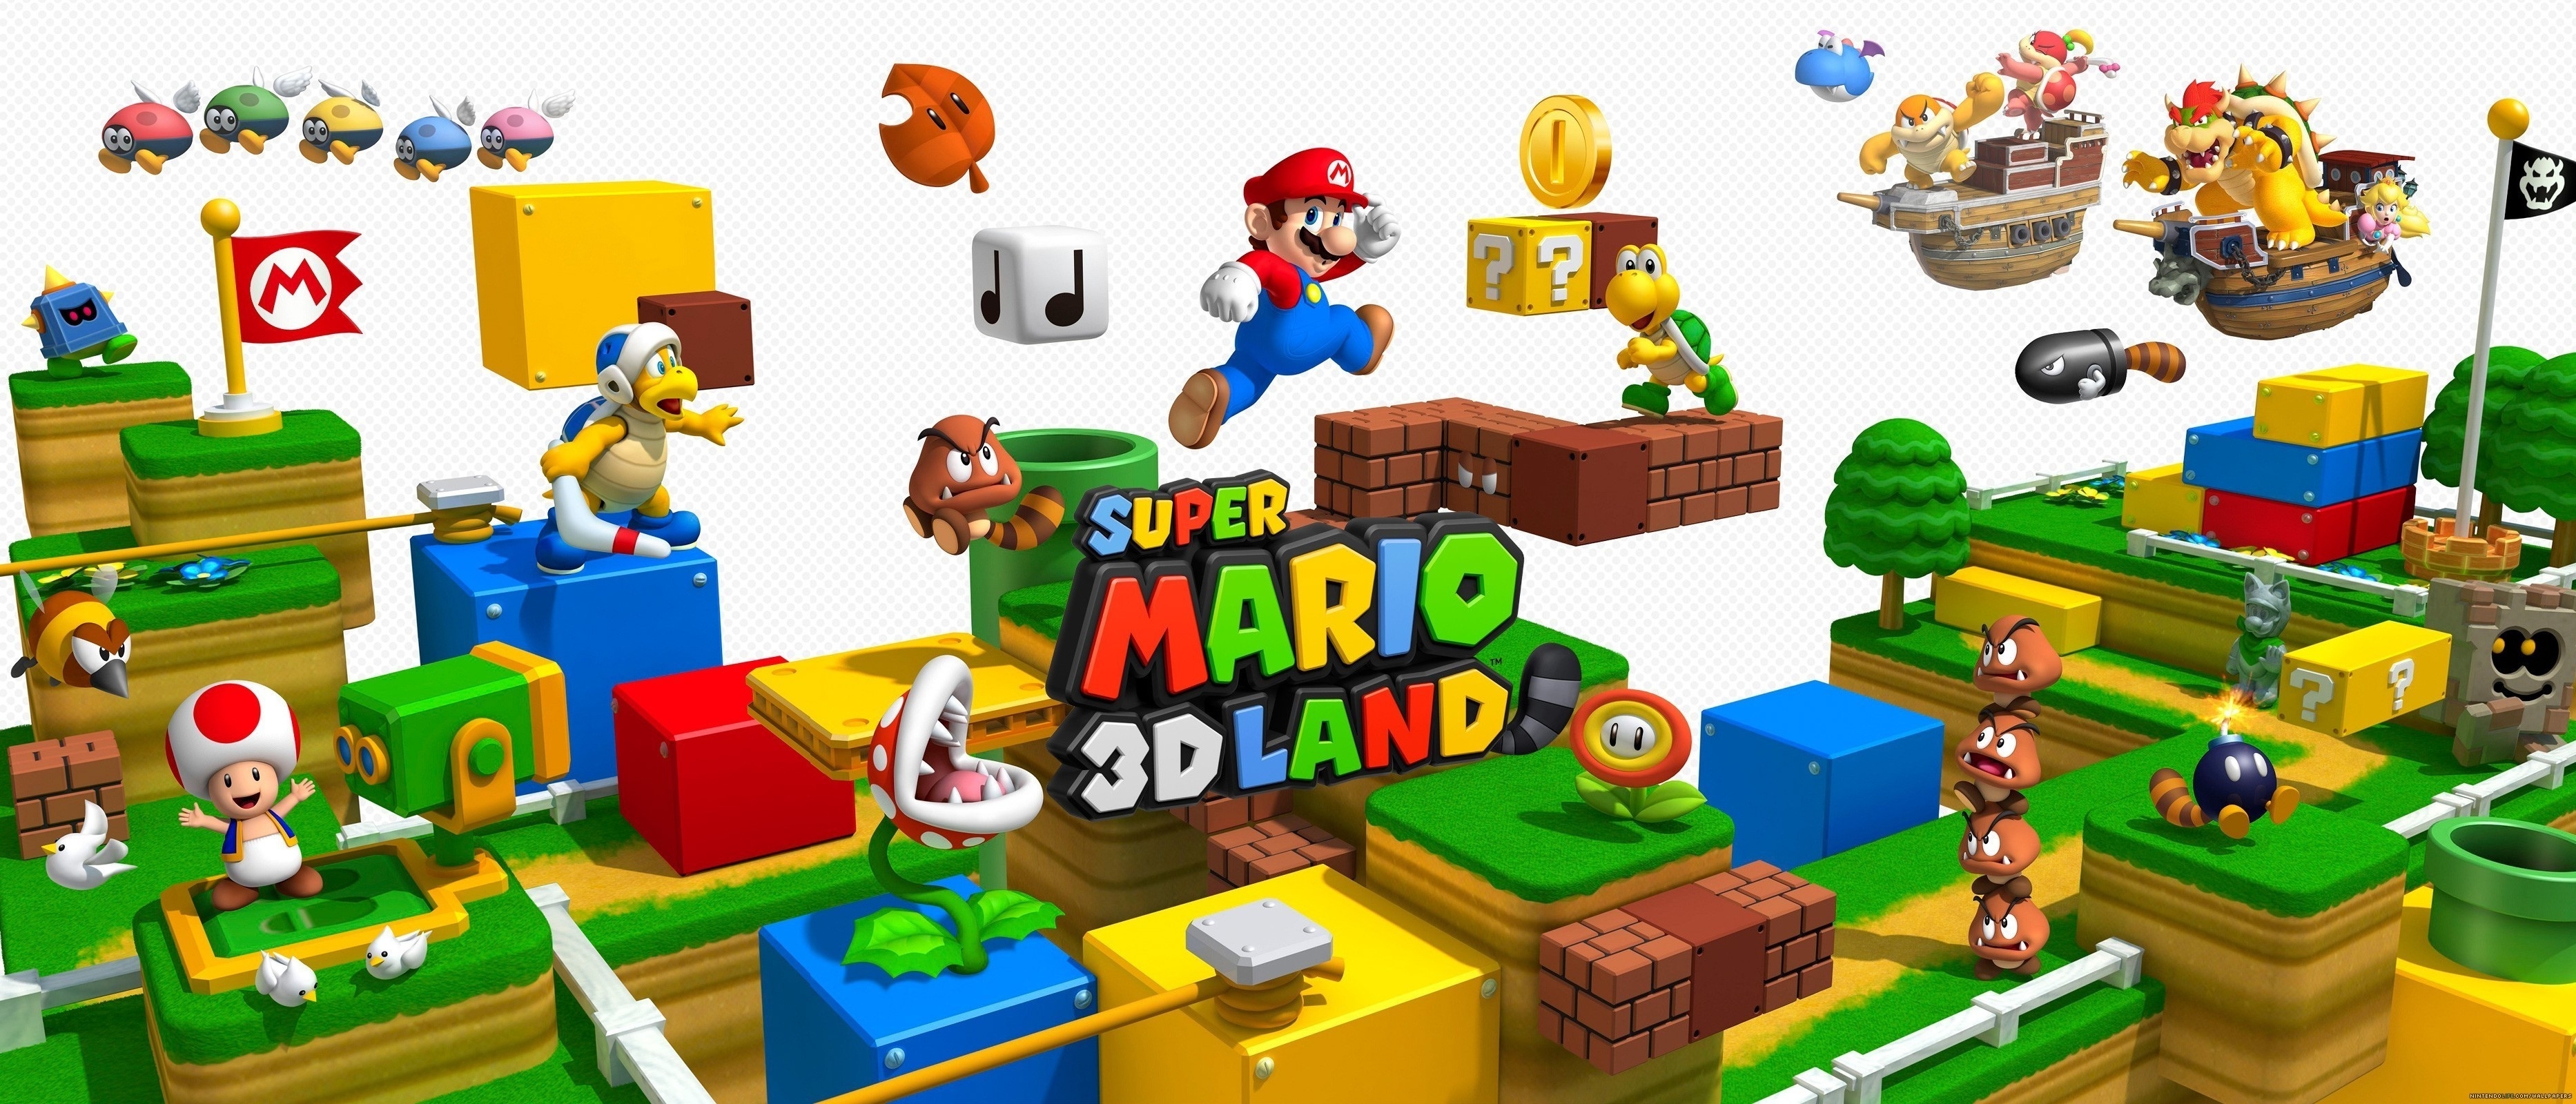 Mario Super Video Nintendo 3ds Game 3d Land Wallpaper